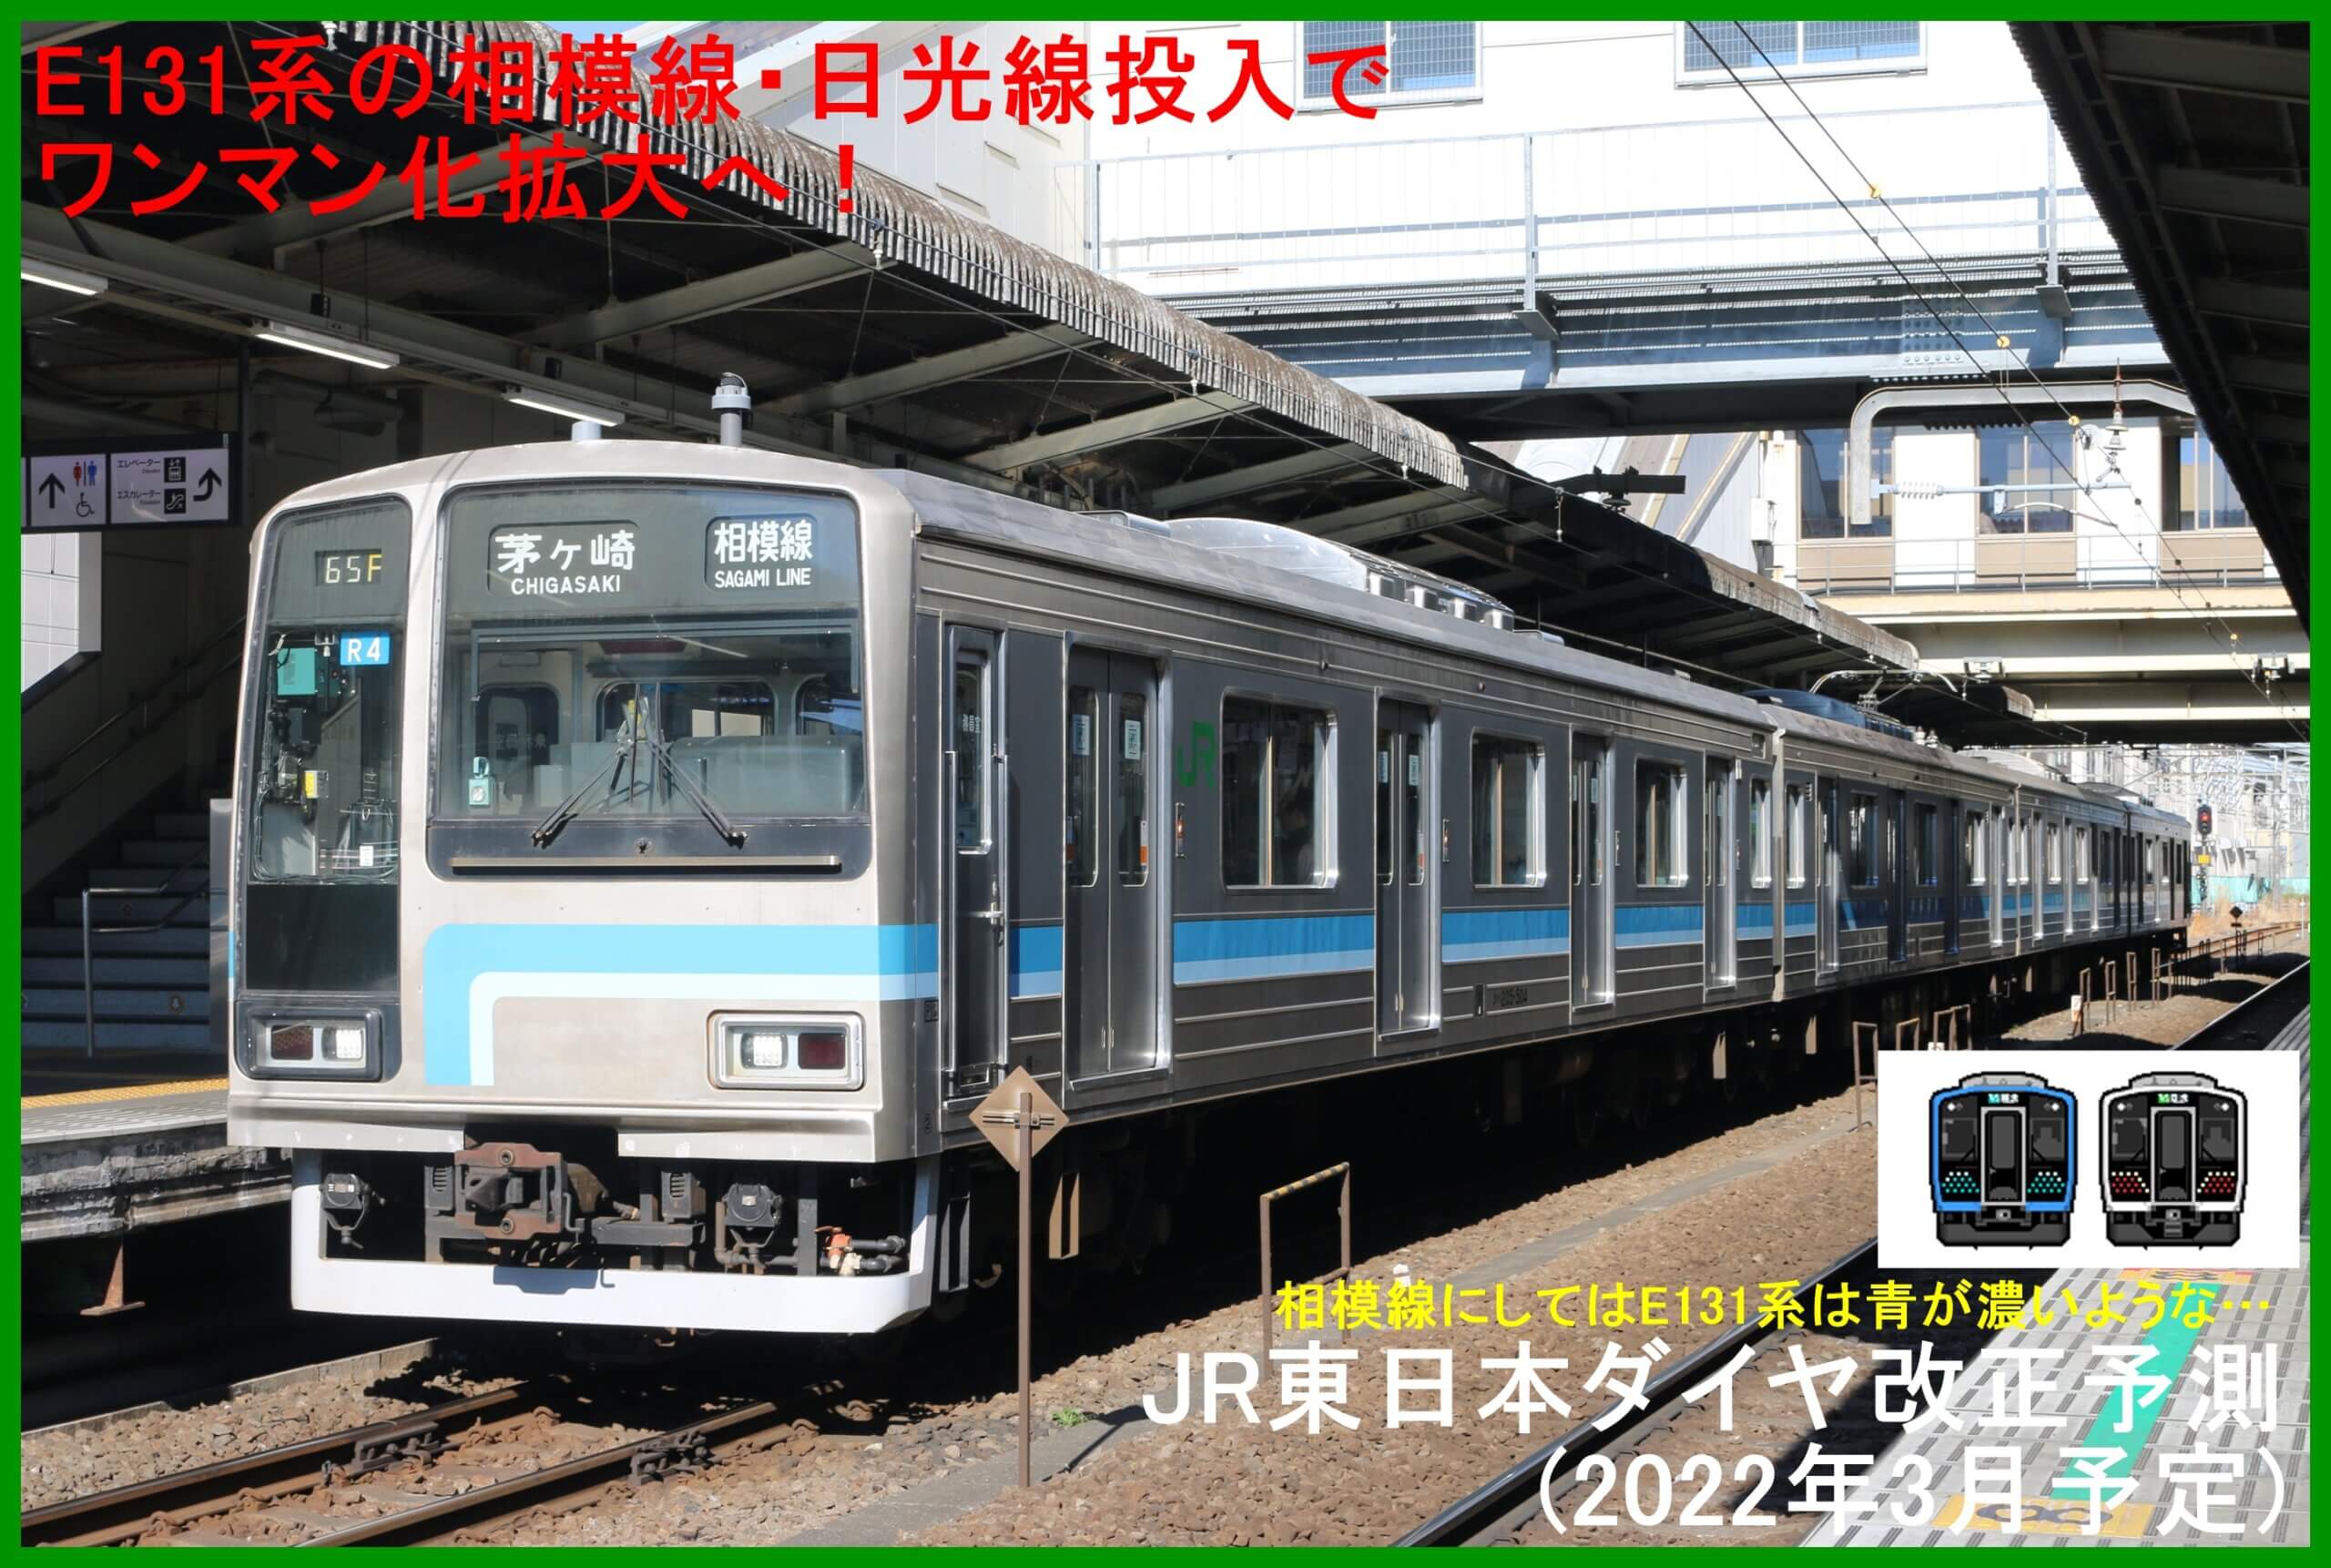 E131系の相模線・日光線投入でワンマン化拡大へ！　JR東日本ダイヤ改正予測(2022年3月予定)